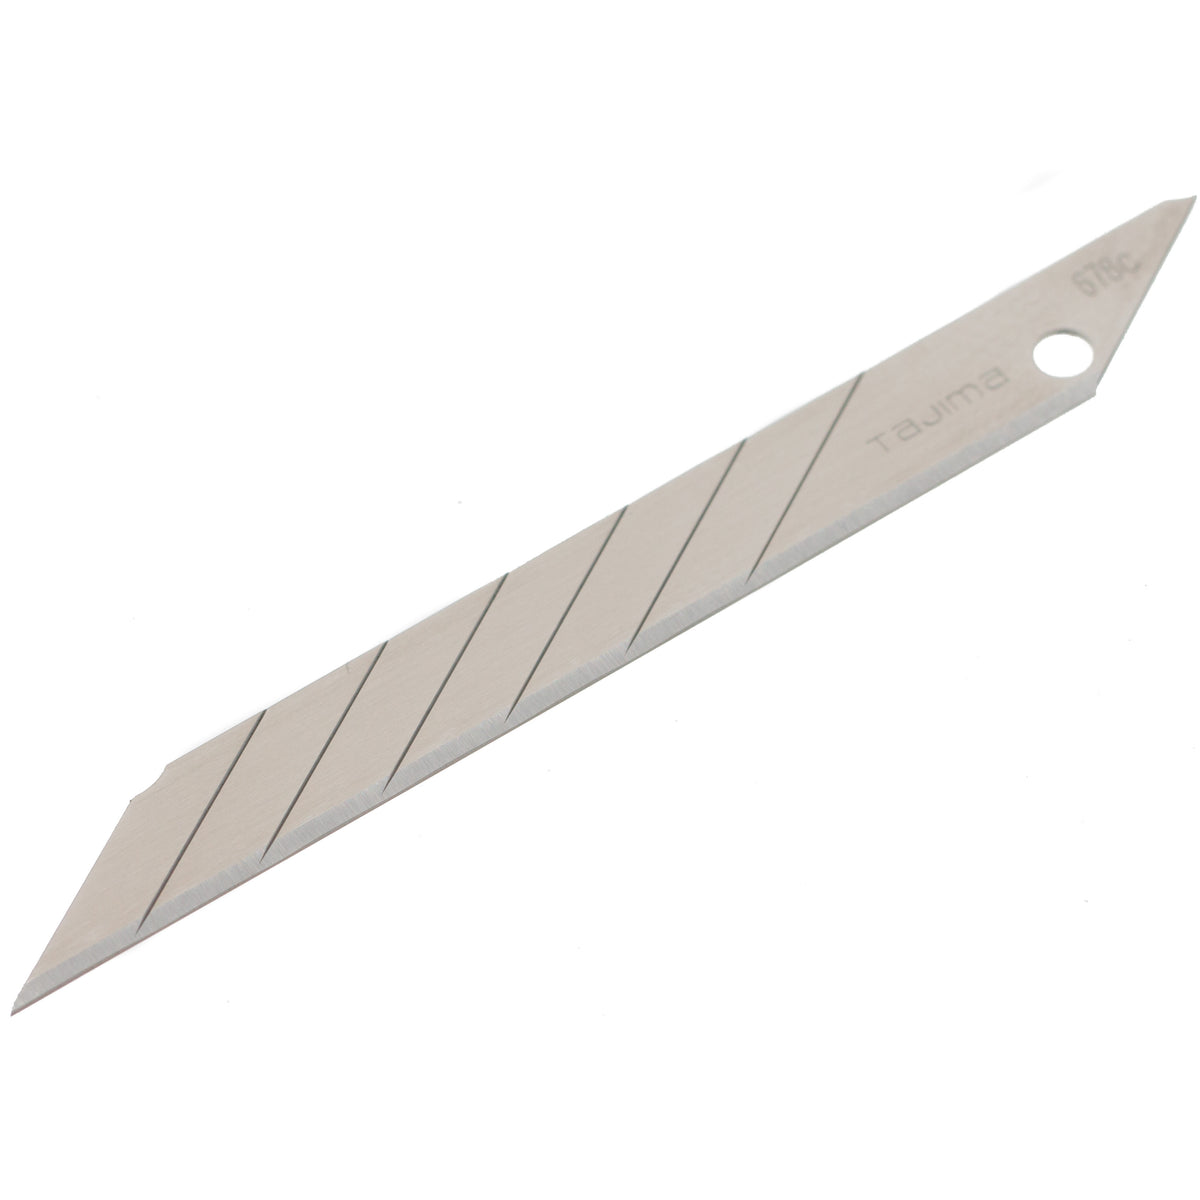 Japanese Tajima Knife Carbon Steel Snap Off Utility Sharp Knife 30